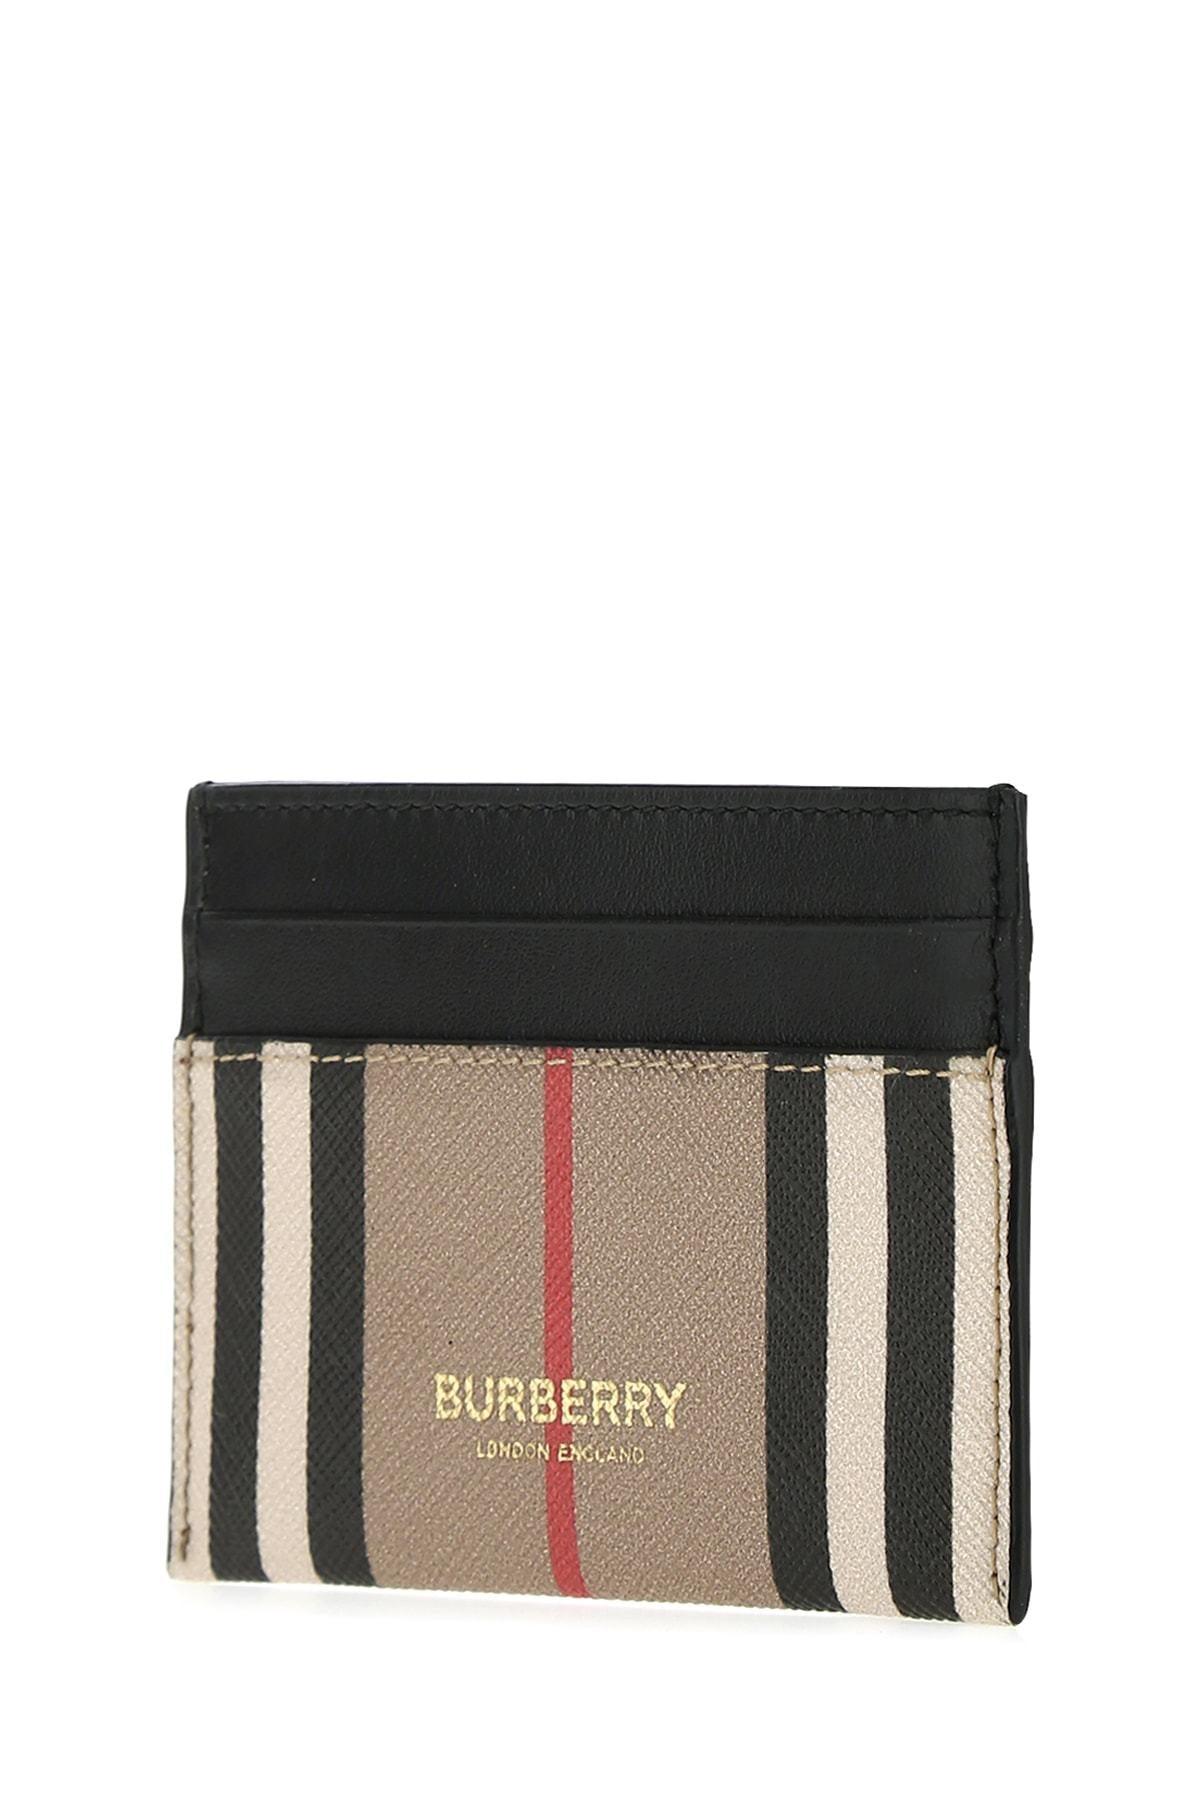 burberry women's card holder